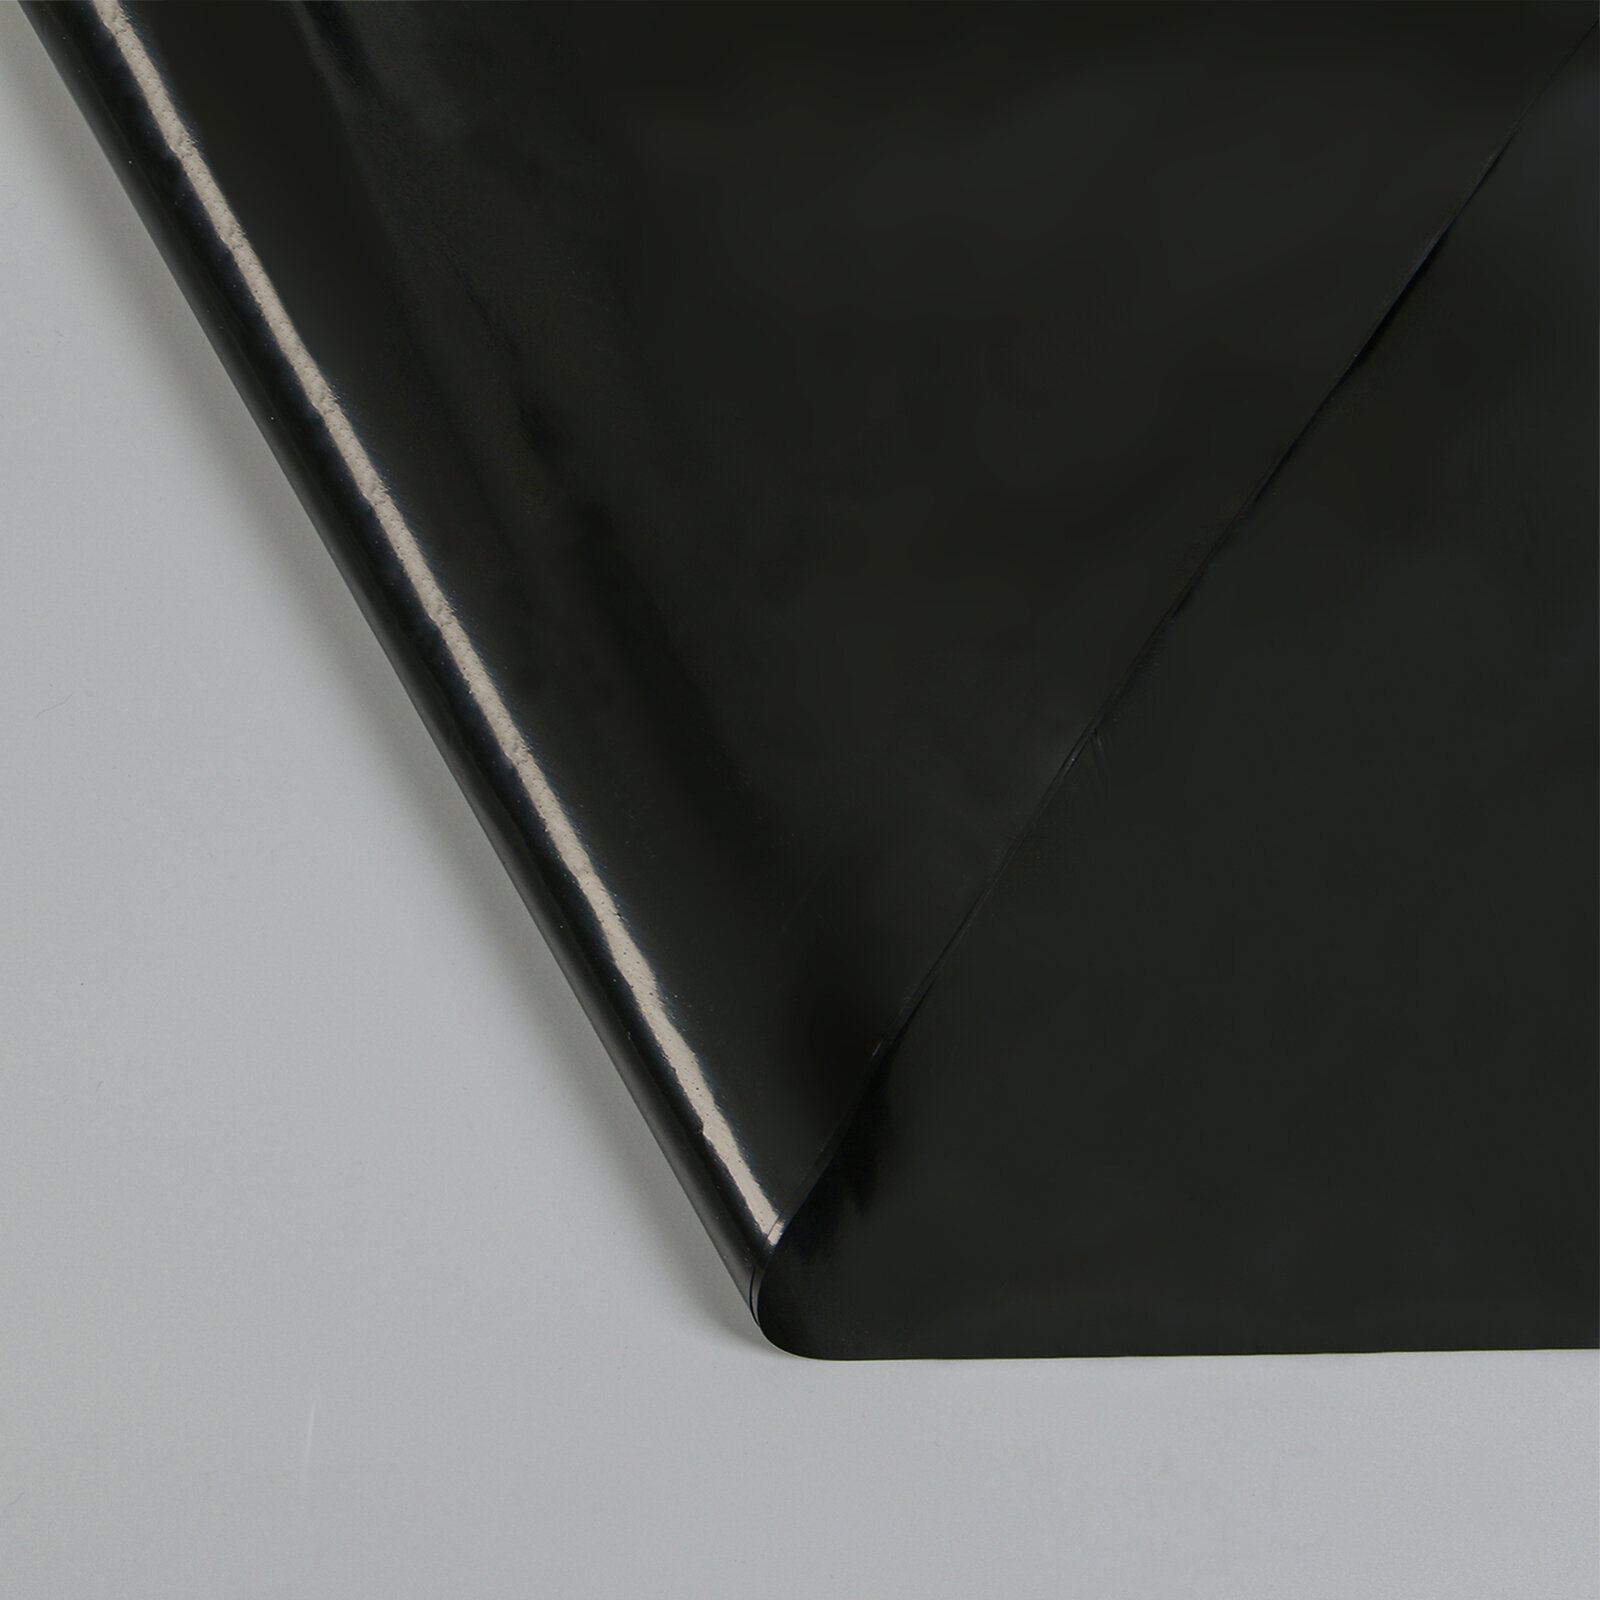 Плёнка полиэтиленовая для пруда 350мкм, 3*5м, рукав (1,5м*2), черная